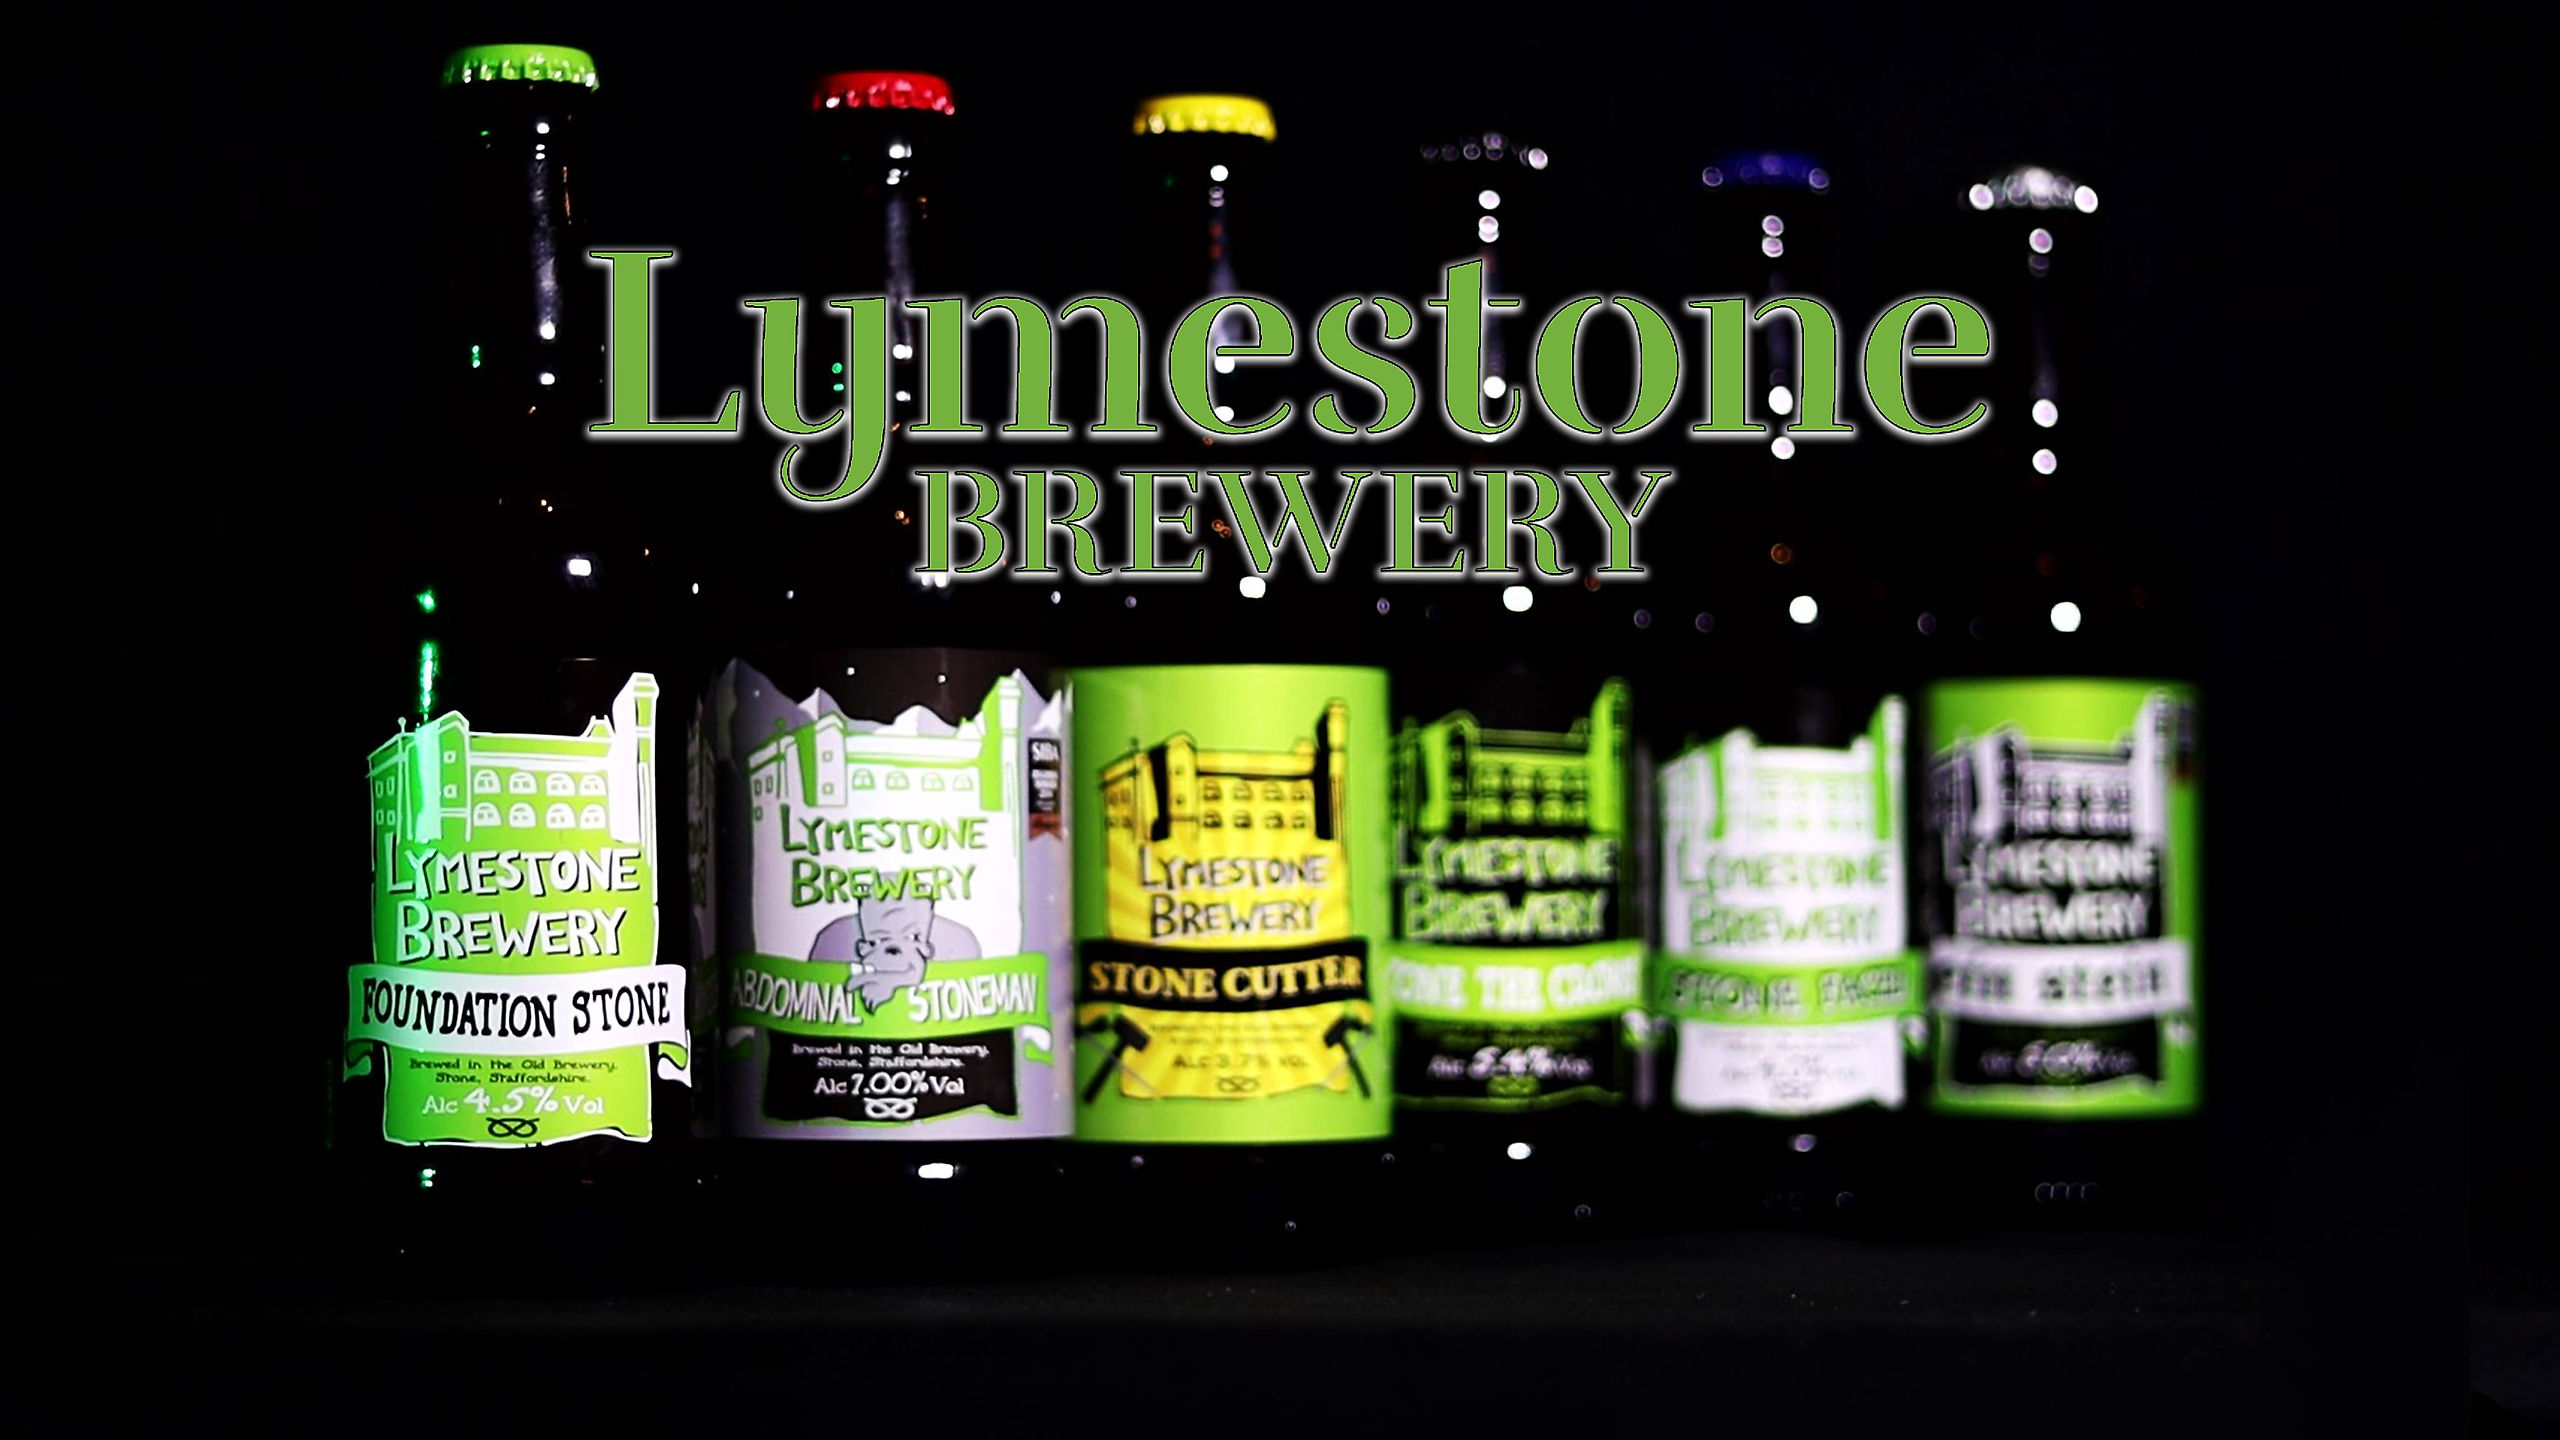 The Lymestone Brewery